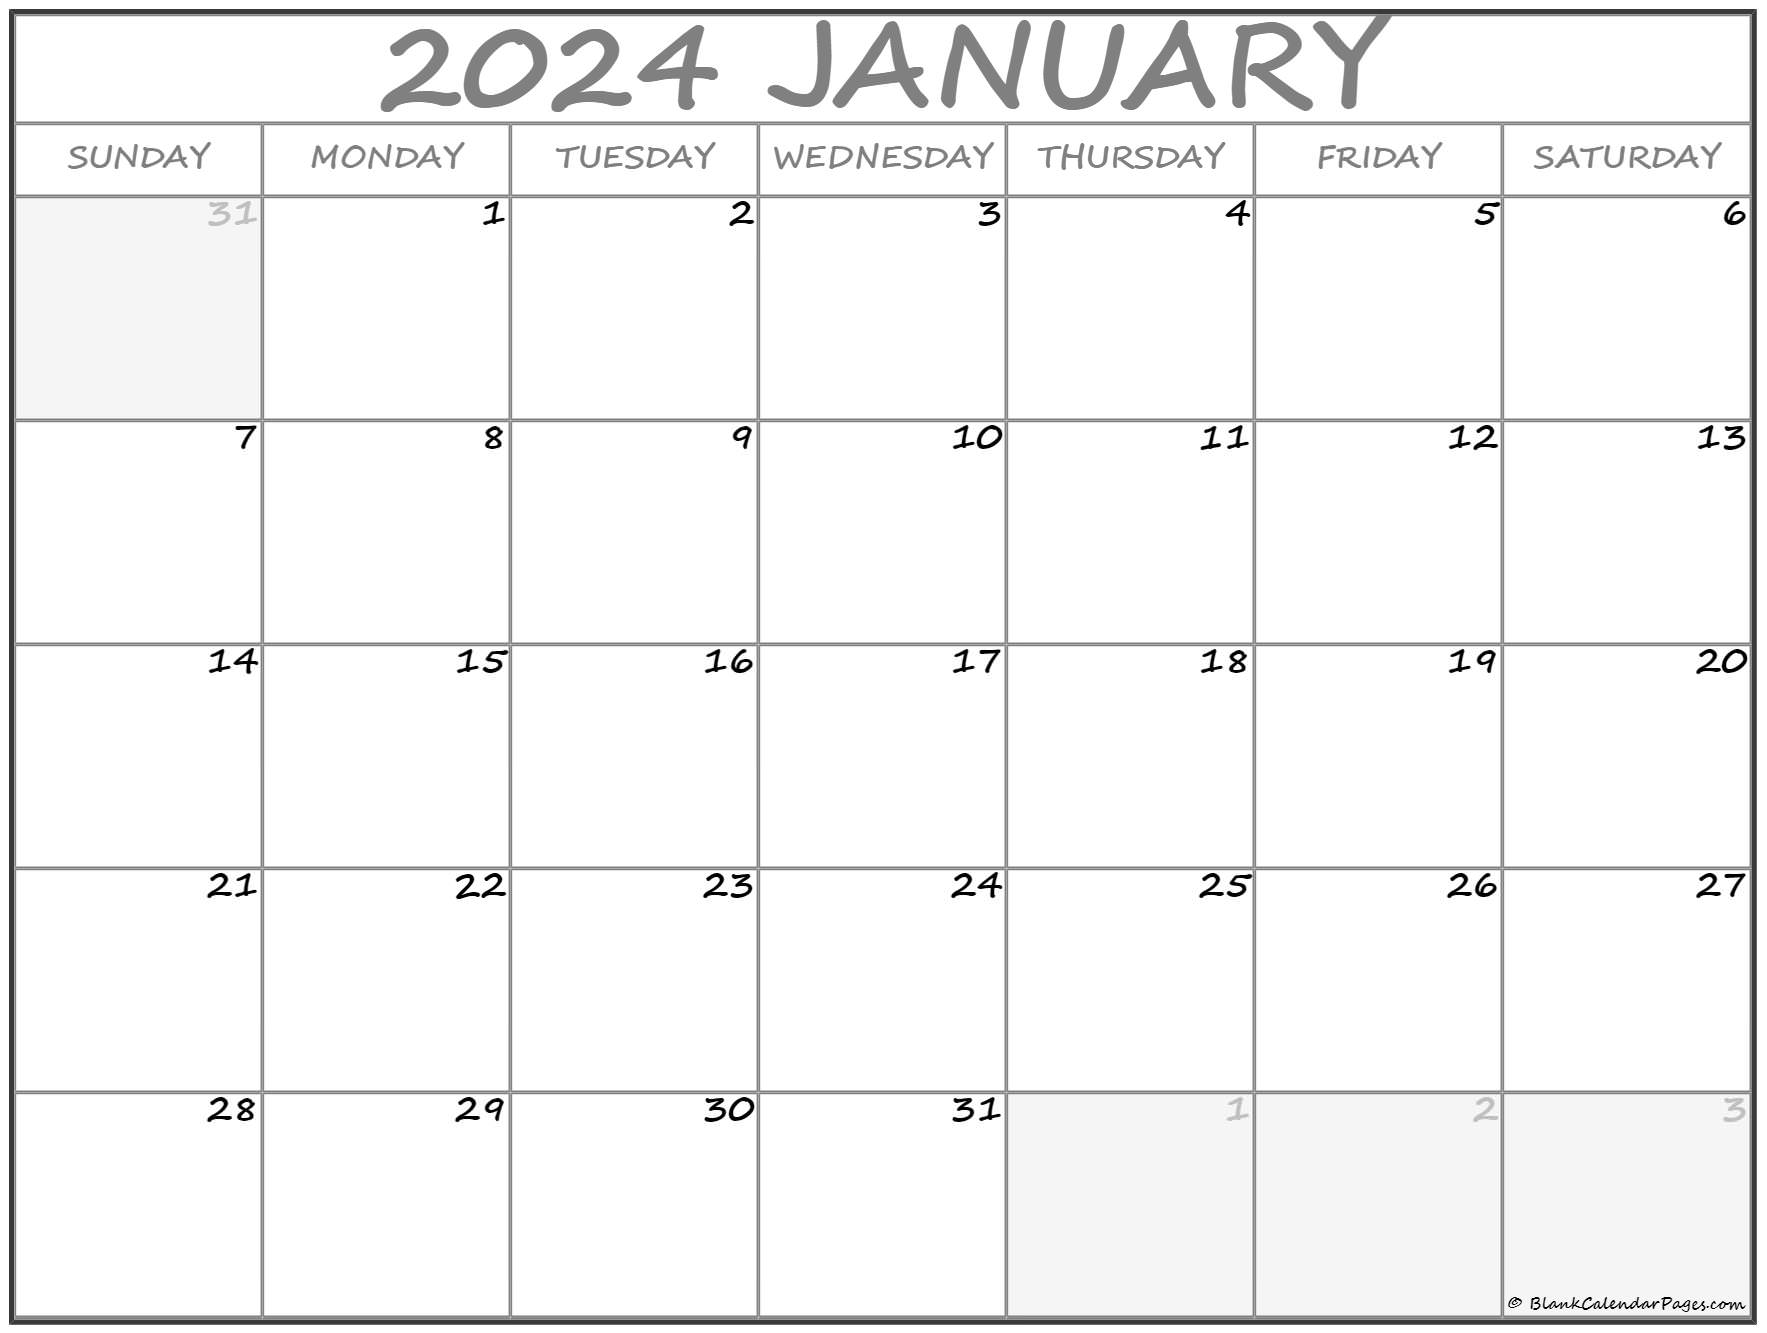 january-2024-calendar-activities-top-amazing-list-of-january-2024-calendar-blank